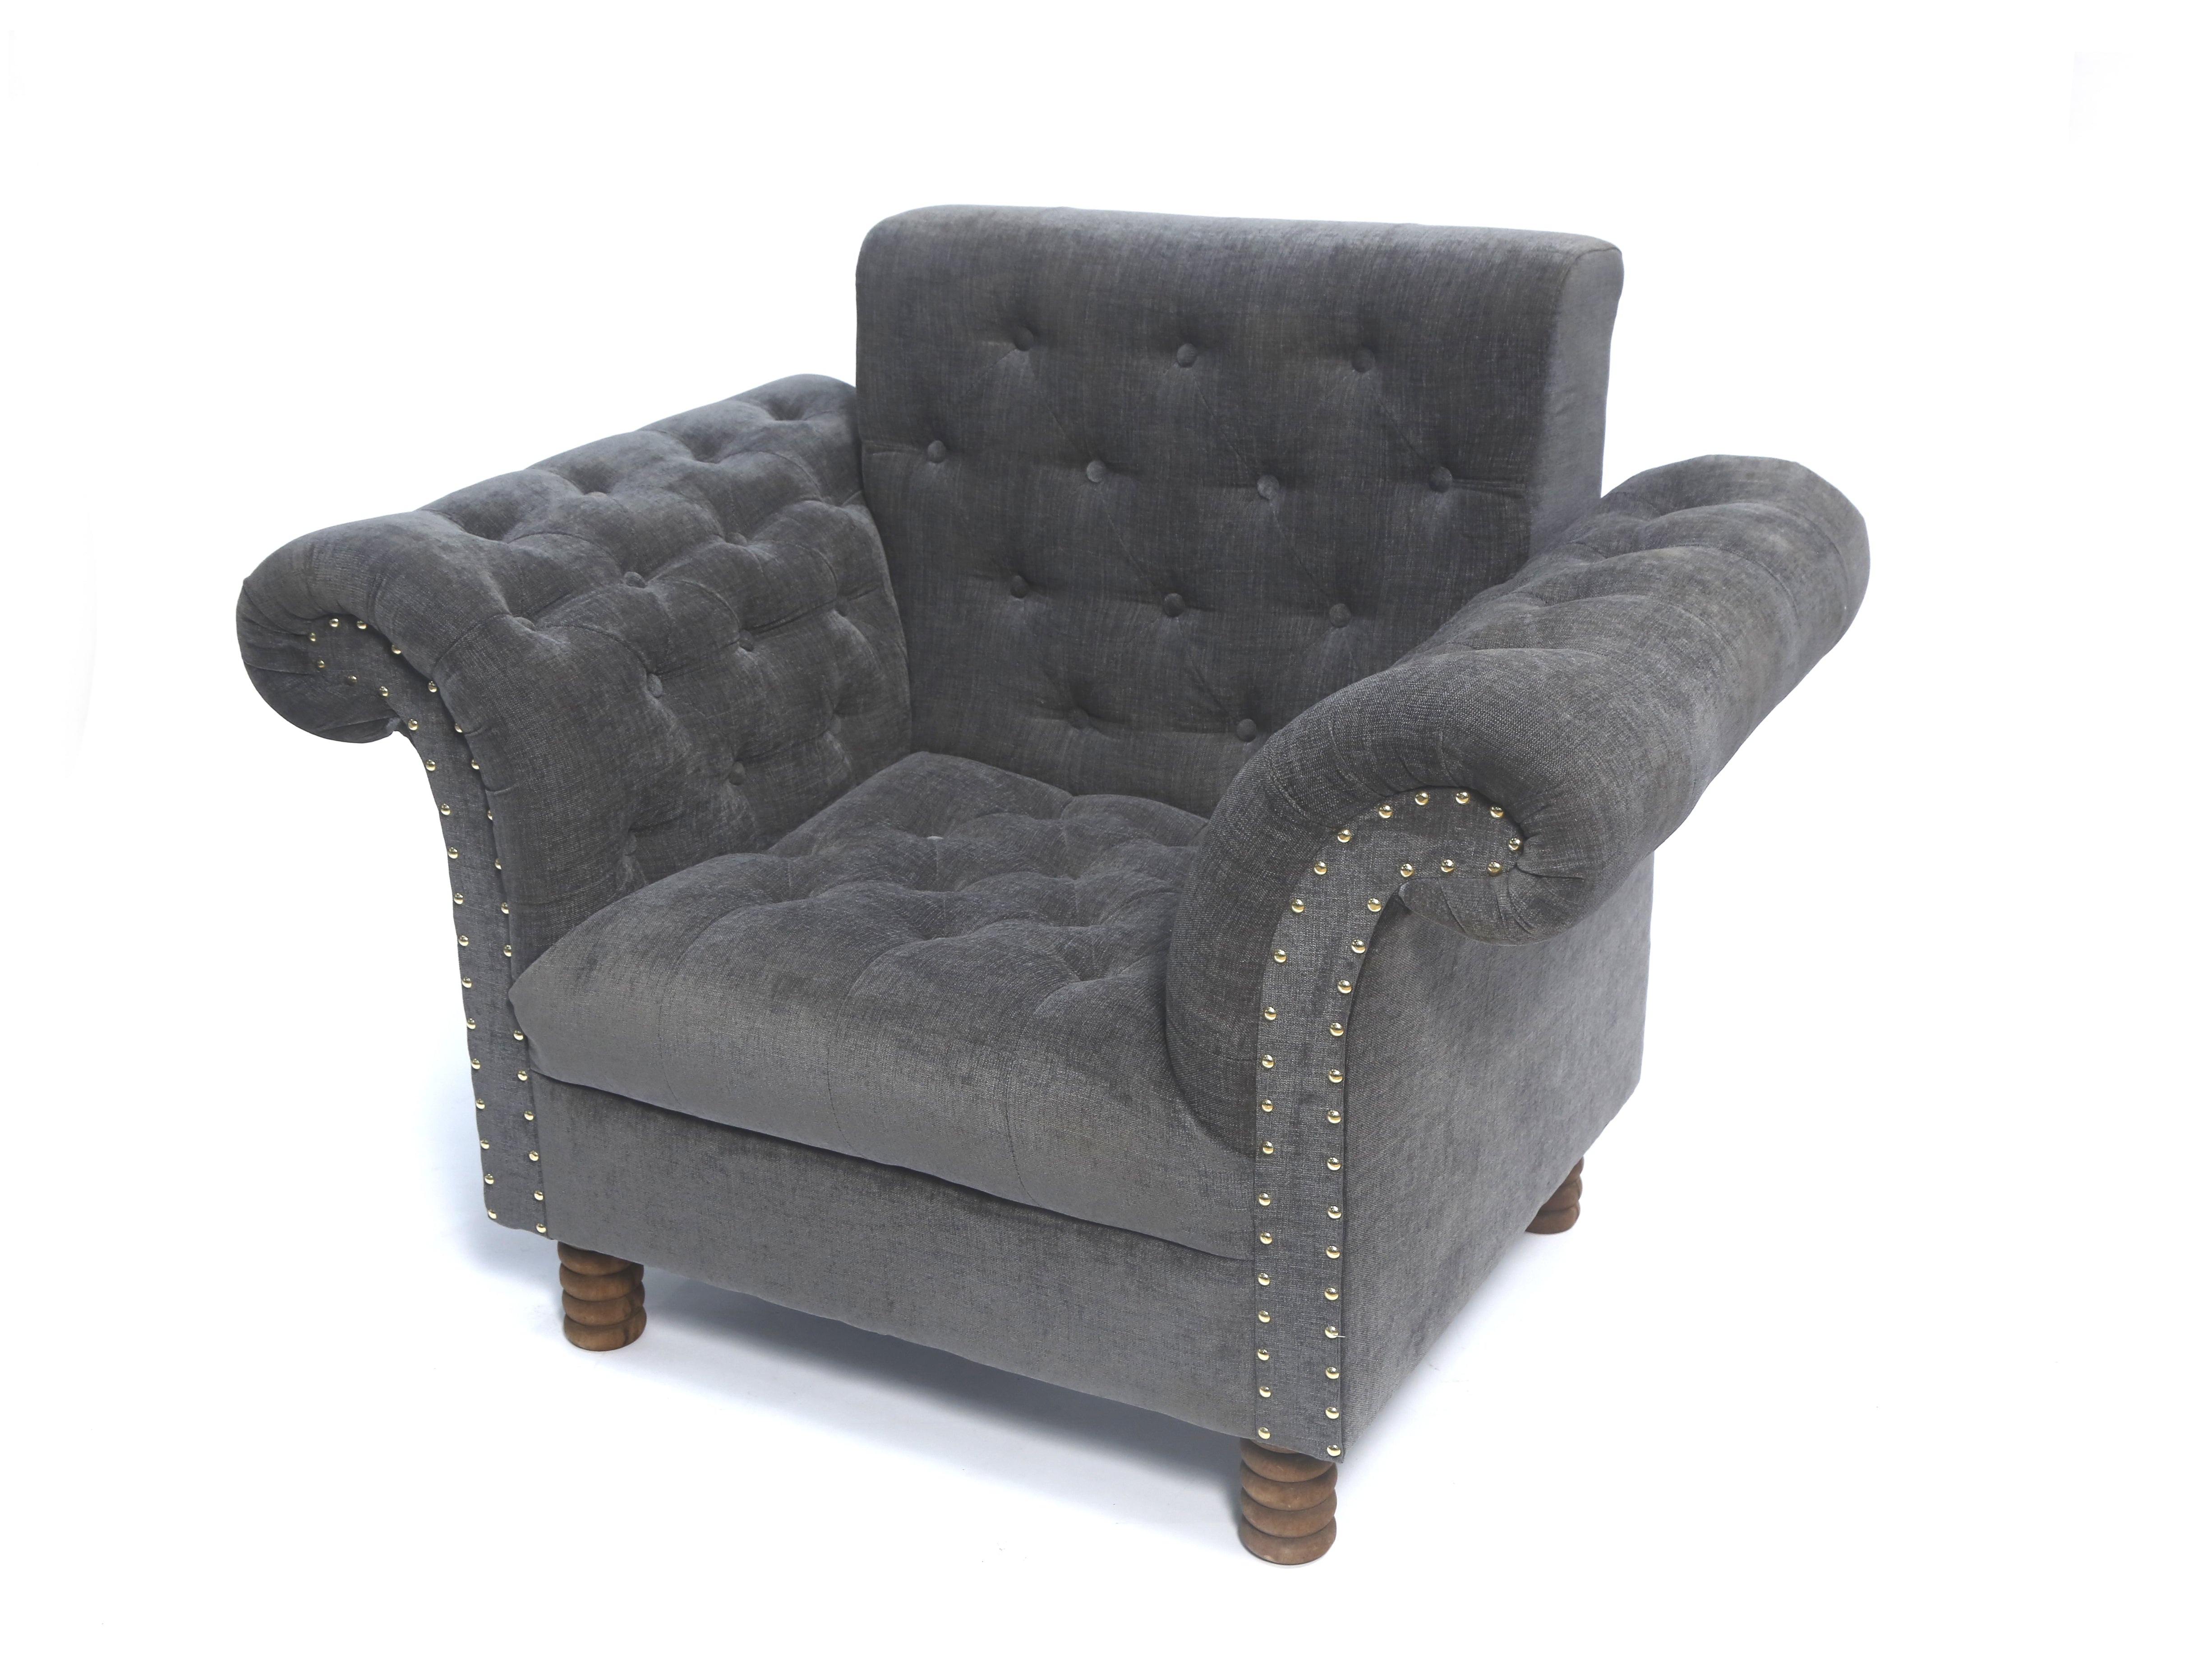 Upholstered Royal Curve single Seater Sofa Sofa